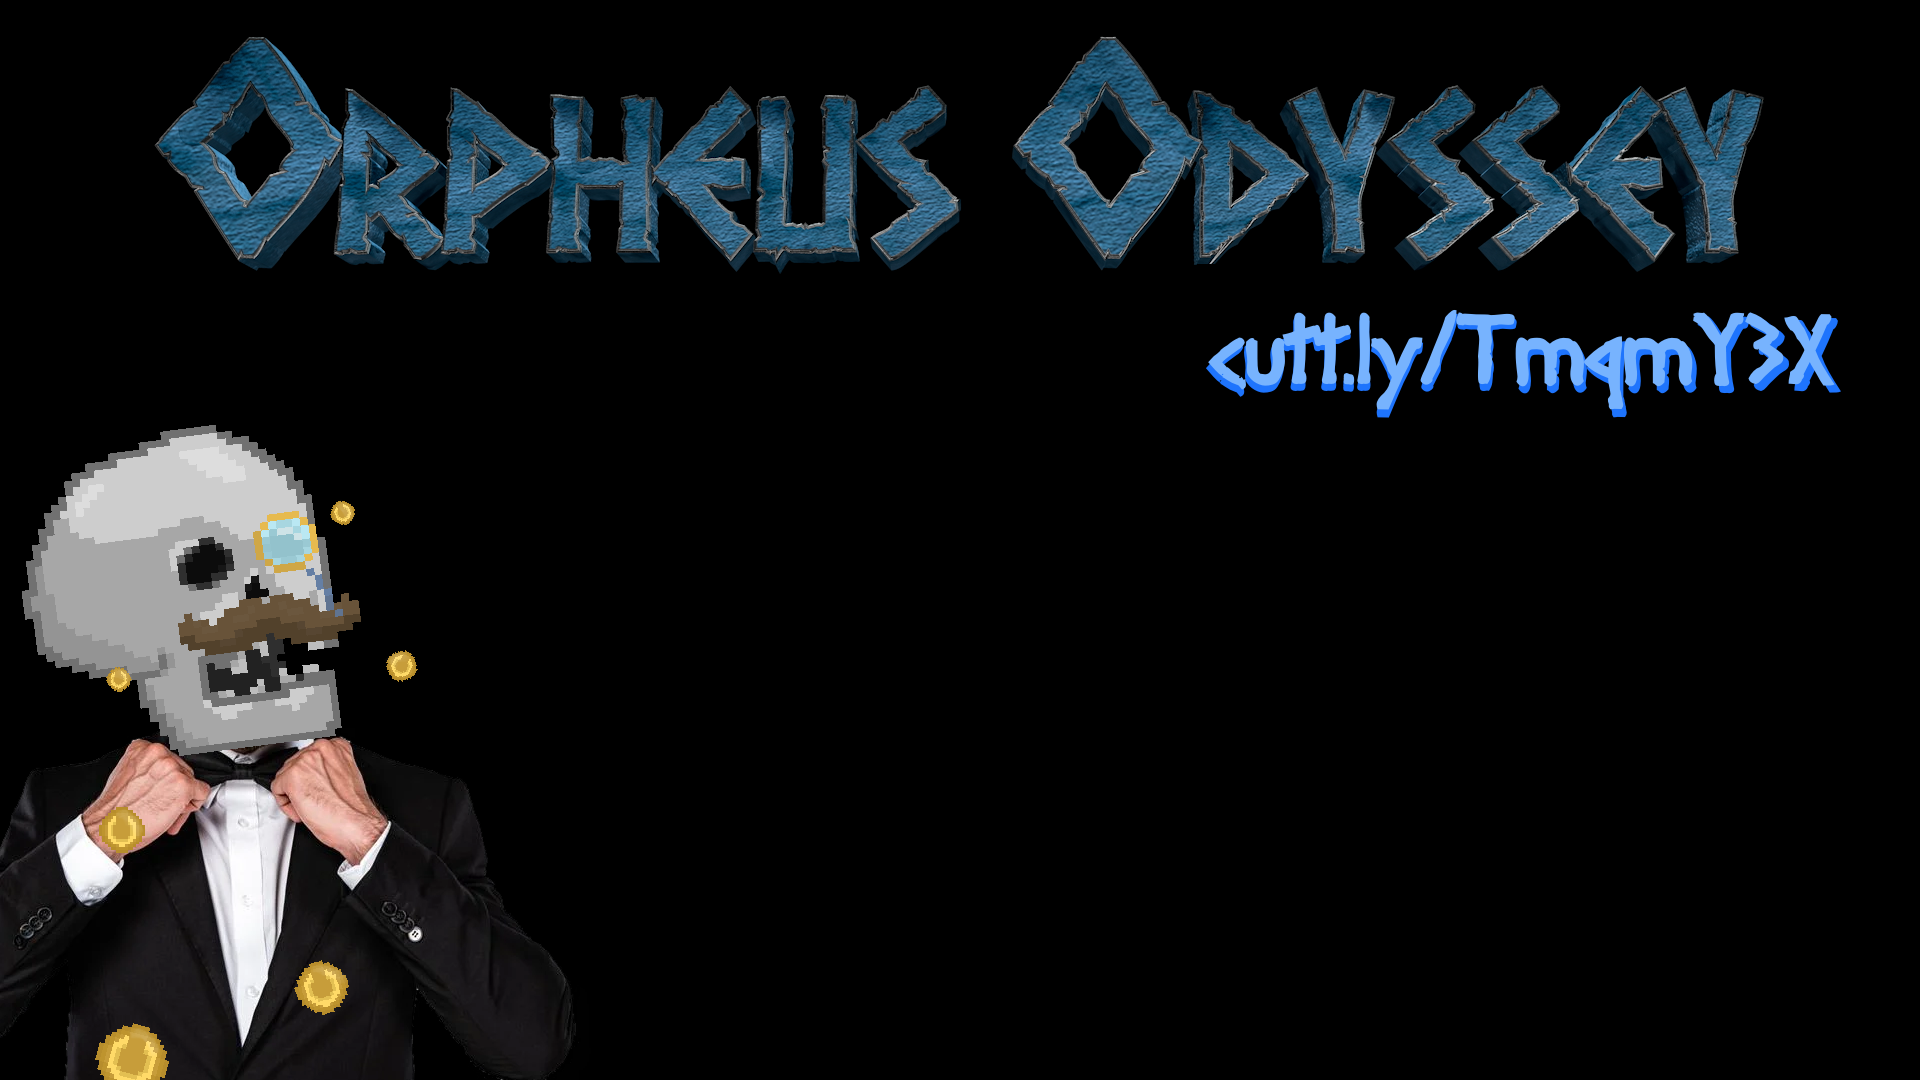 Orpheus odyssey